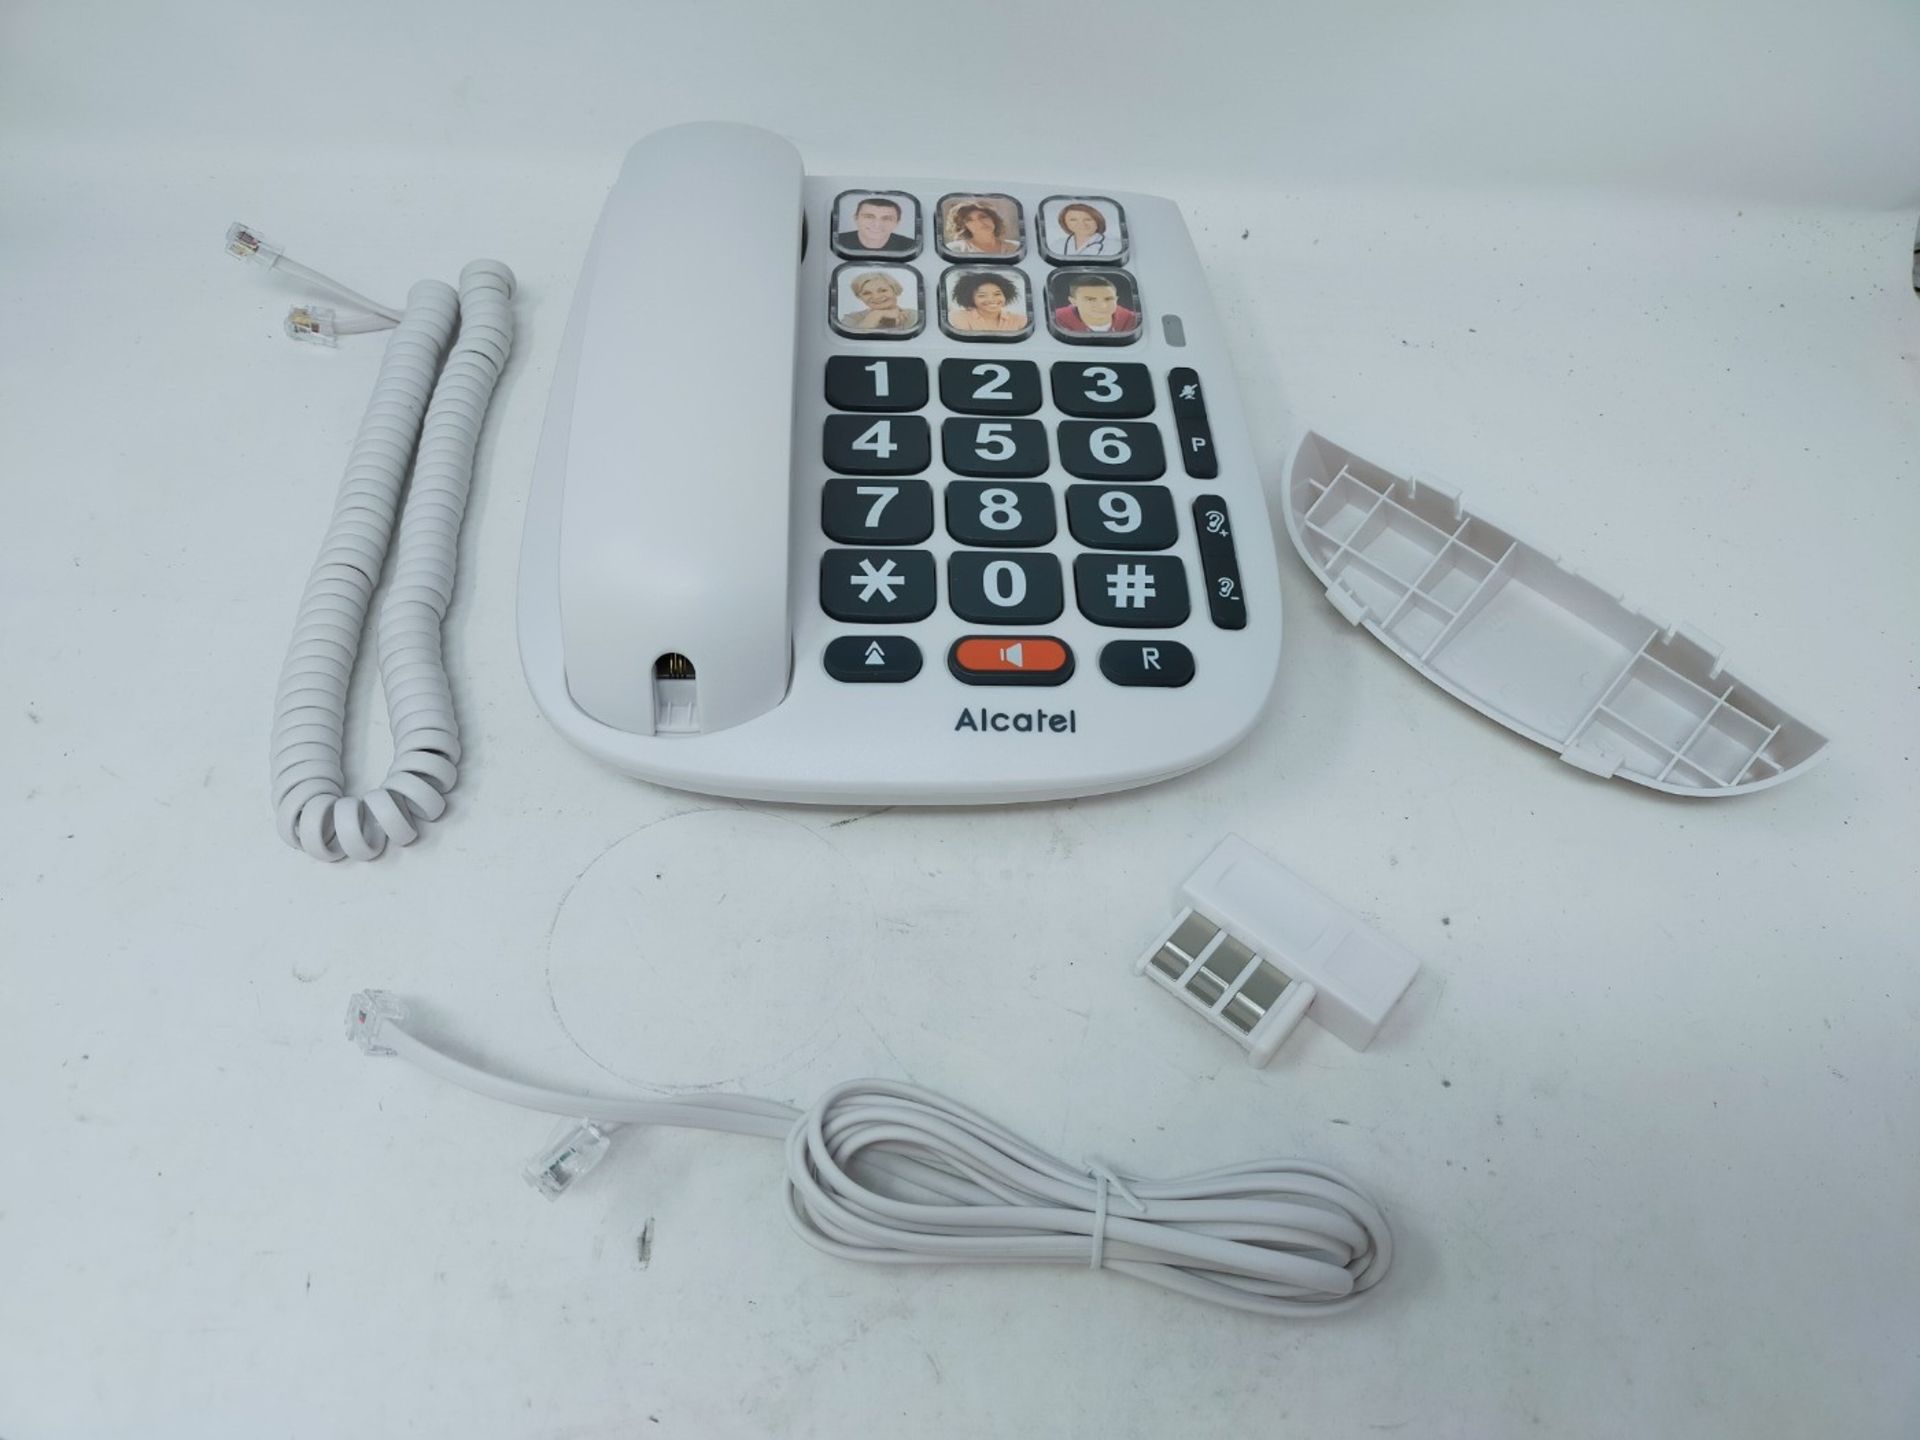 Alcatel Max 10 Corded Phone for Seniors White. - Image 3 of 3